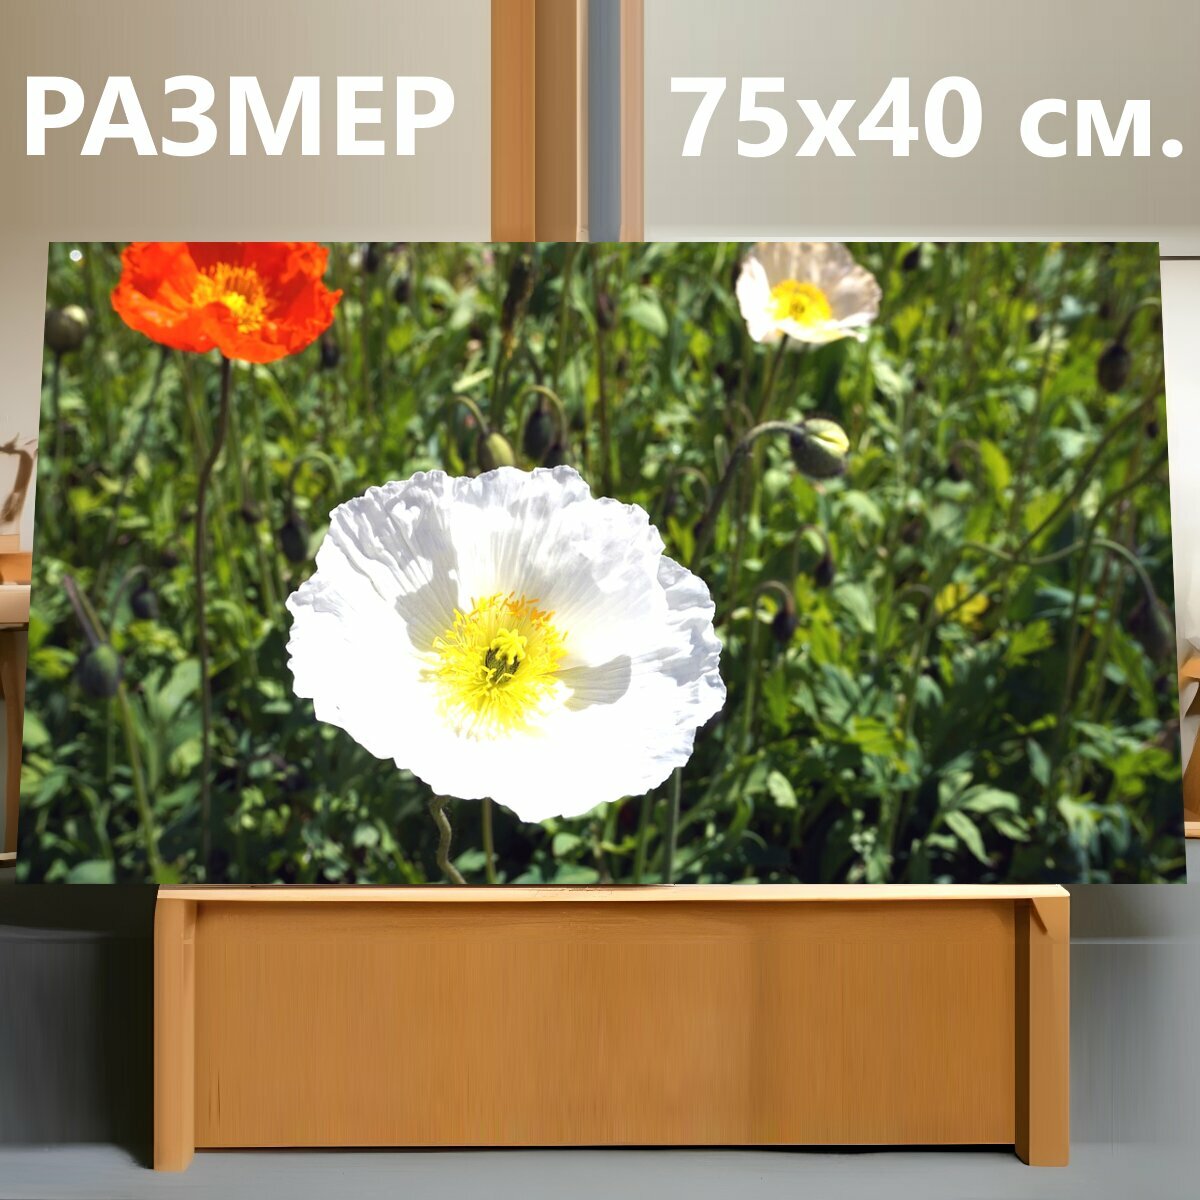 Картина на холсте "Цветок, белый, белый цветок" на подрамнике 75х40 см. для интерьера